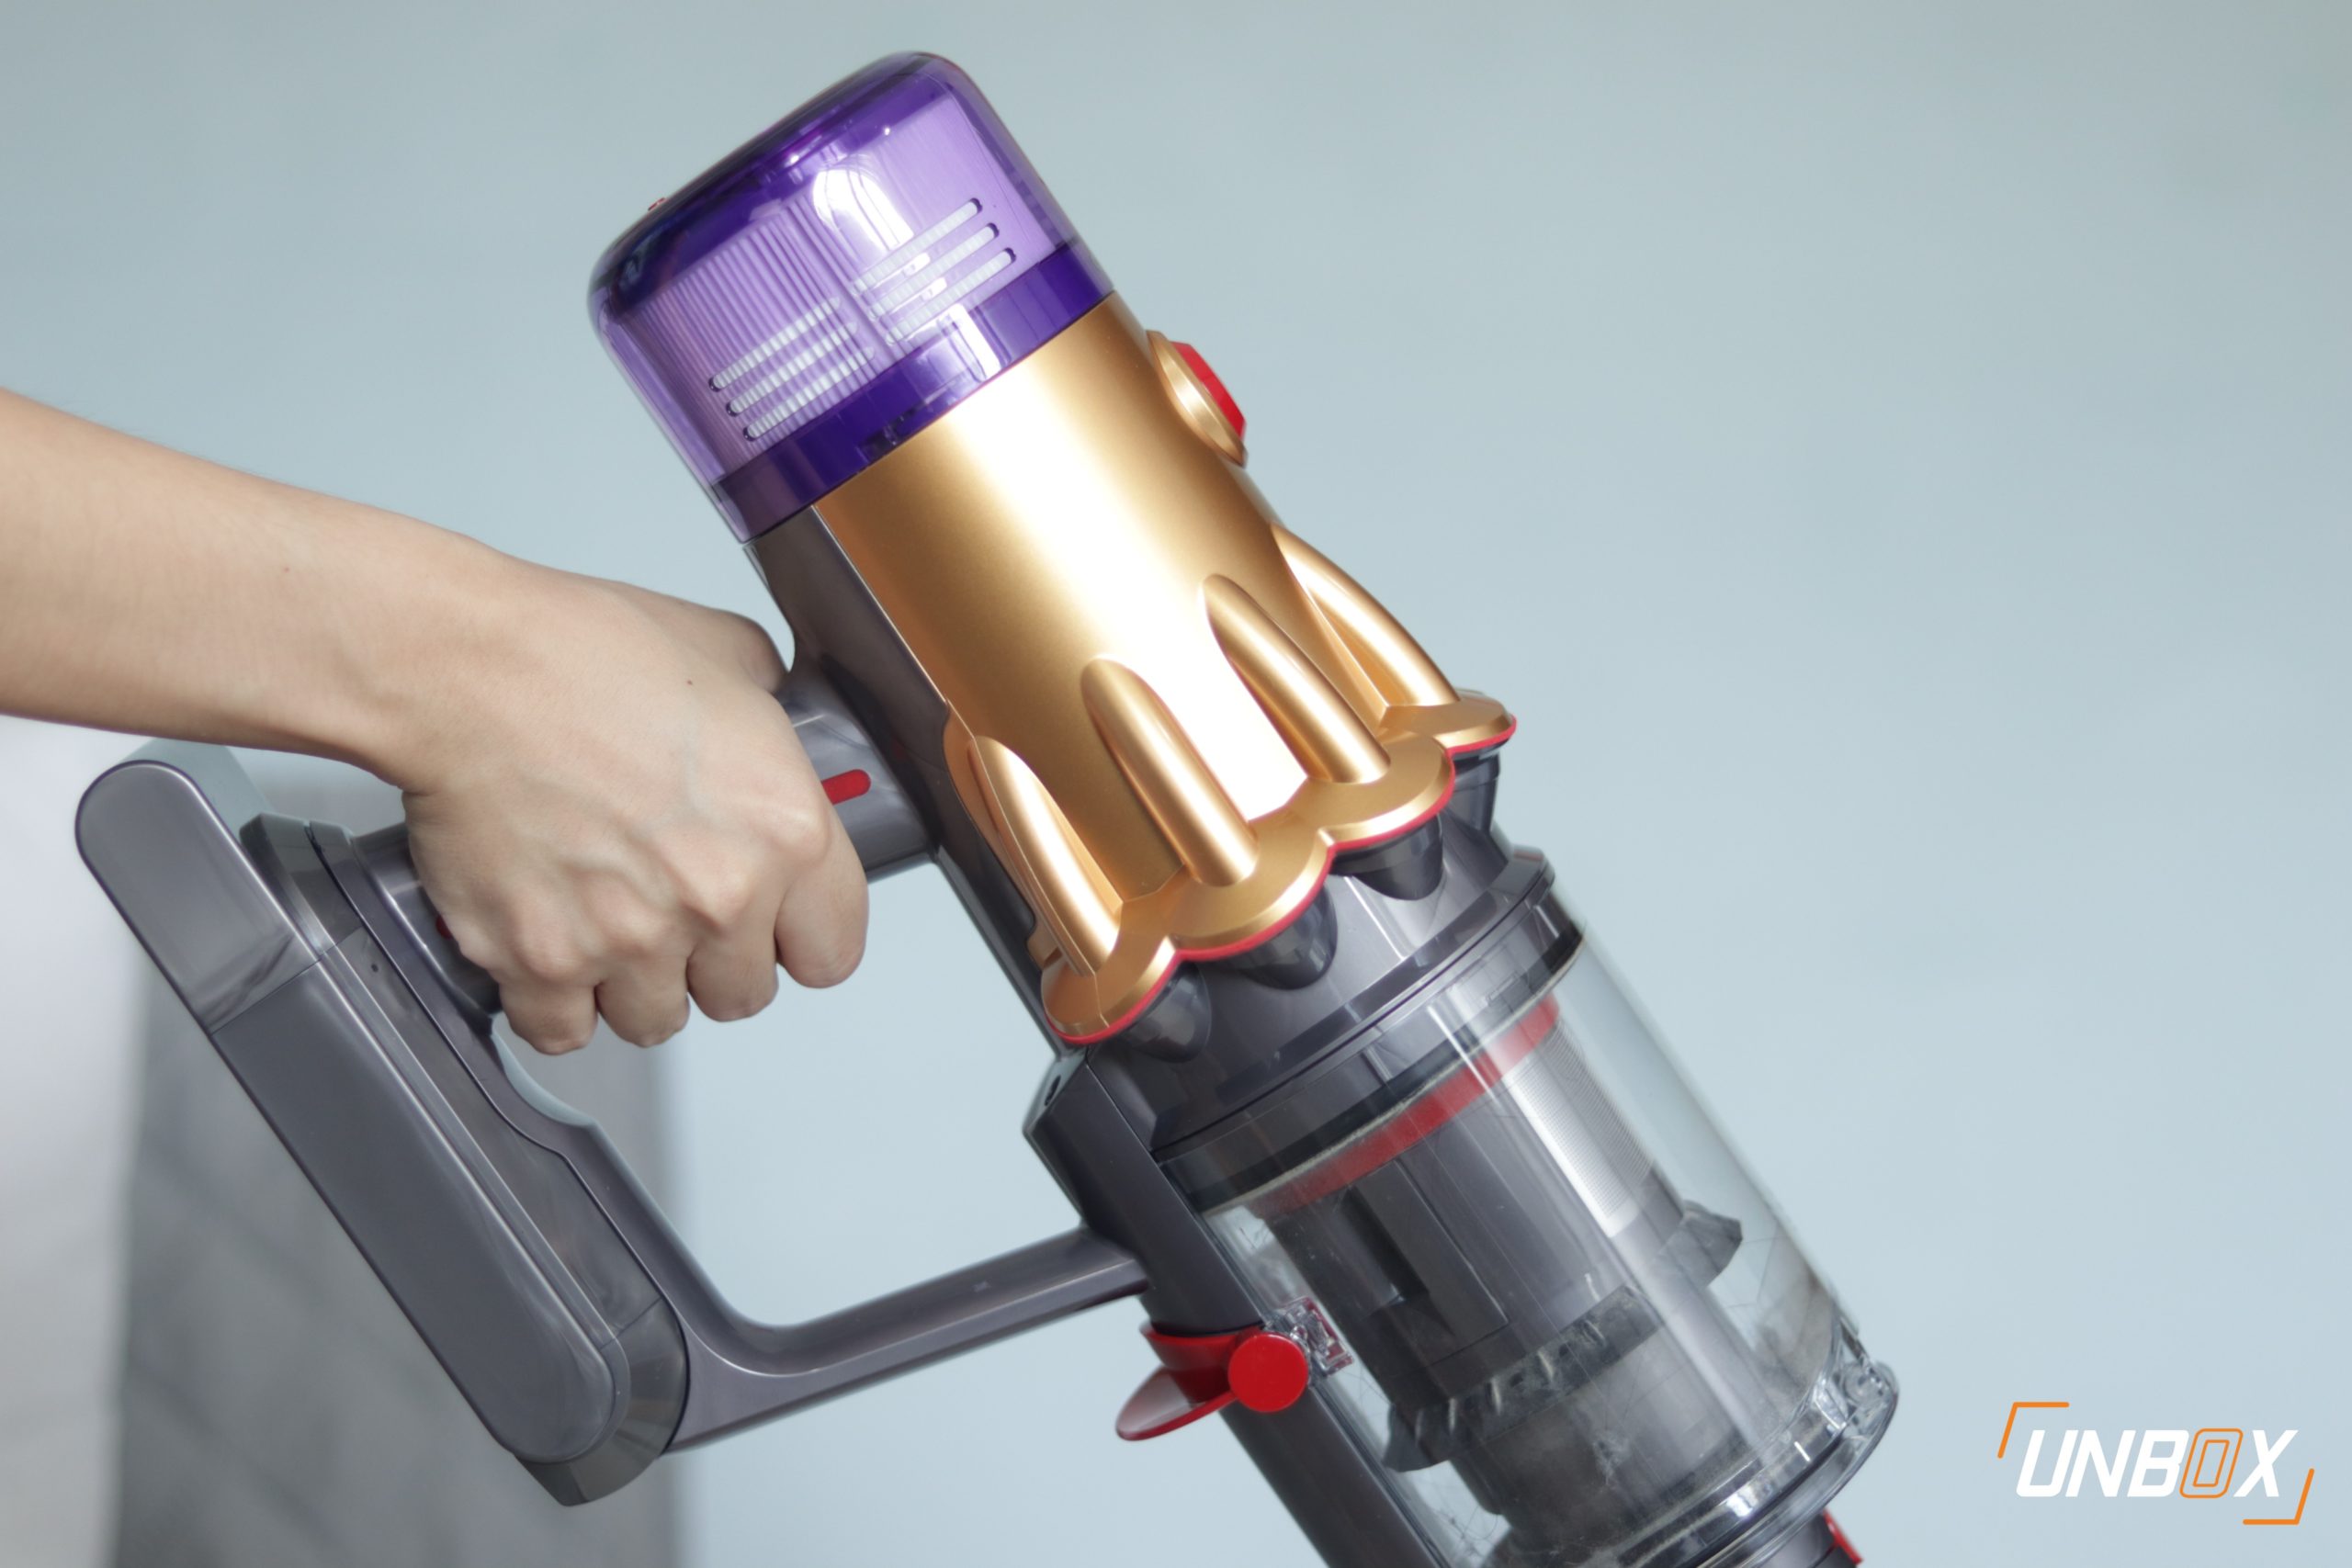 Dyson V12 Detect Slim Absolute Vacuum Cleaner